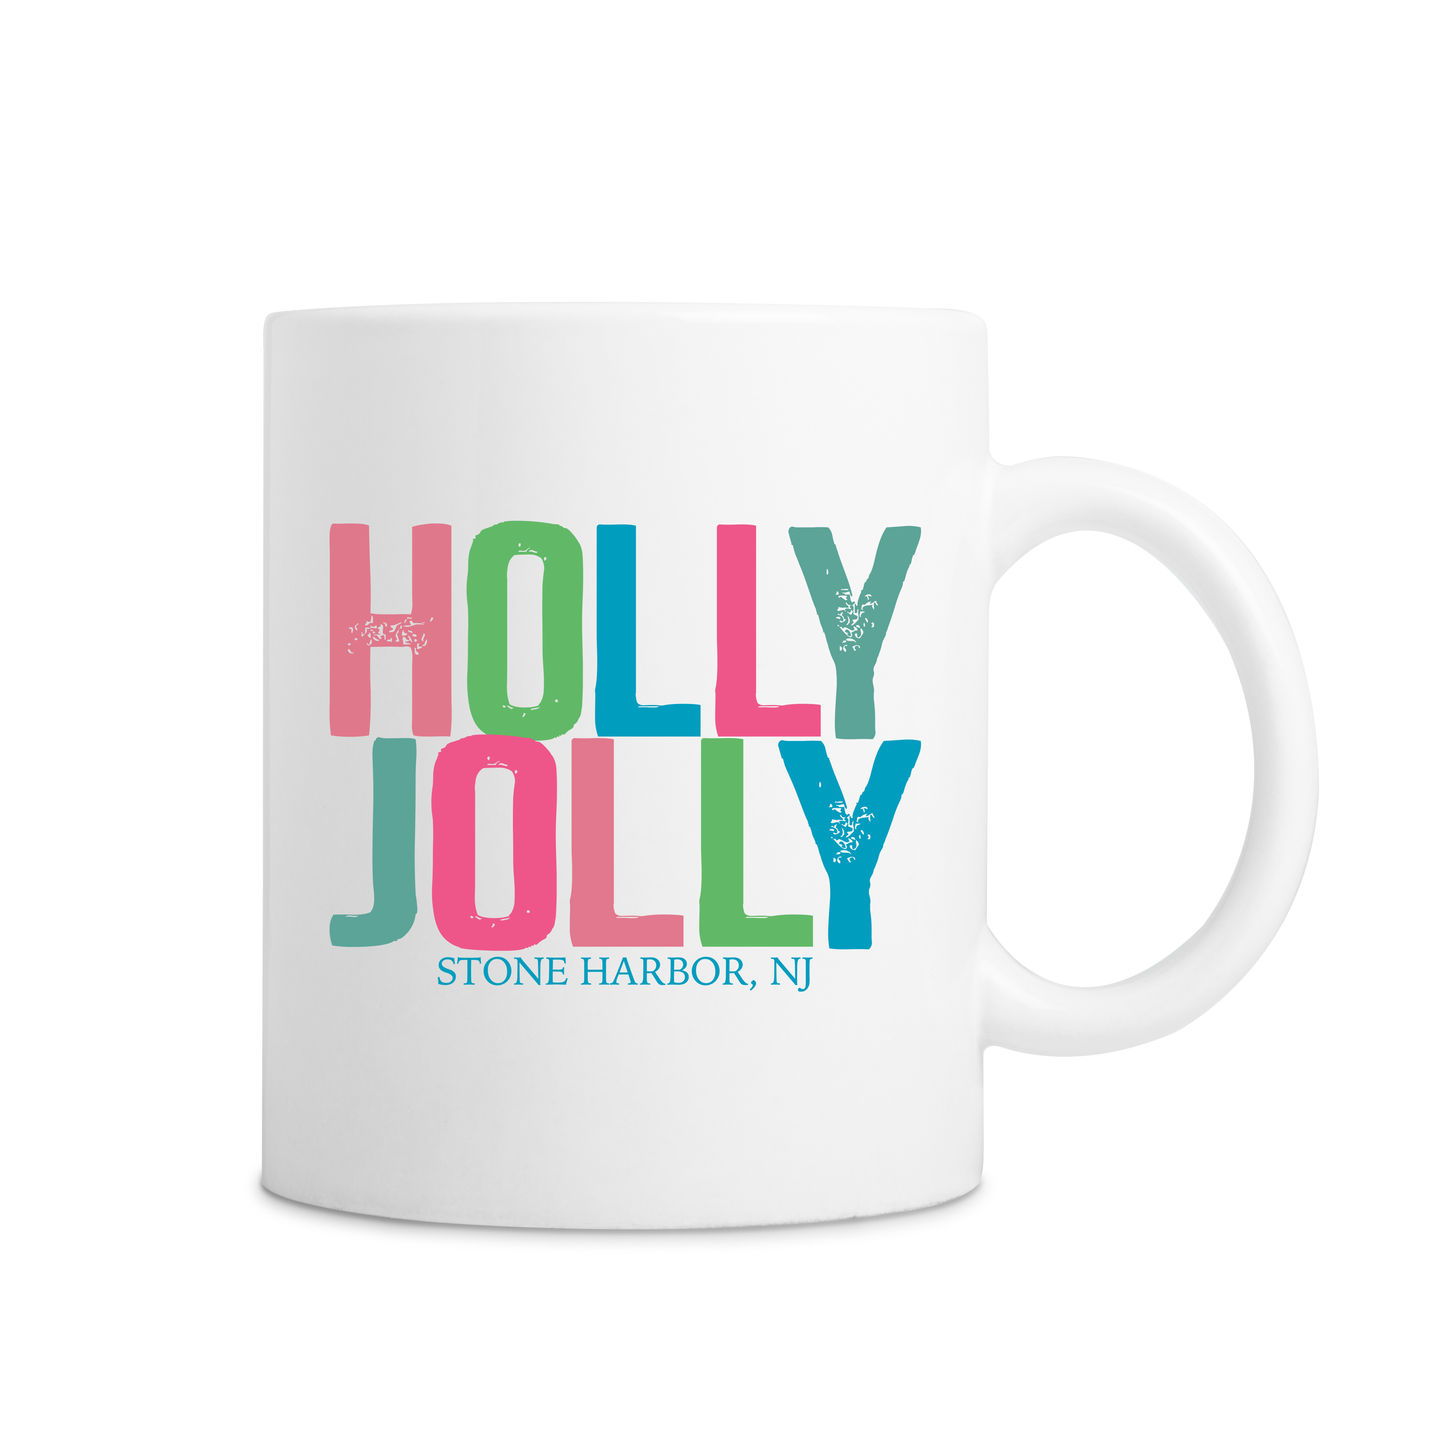 Stone Harbor Colorful Holly Jolly Mug - White